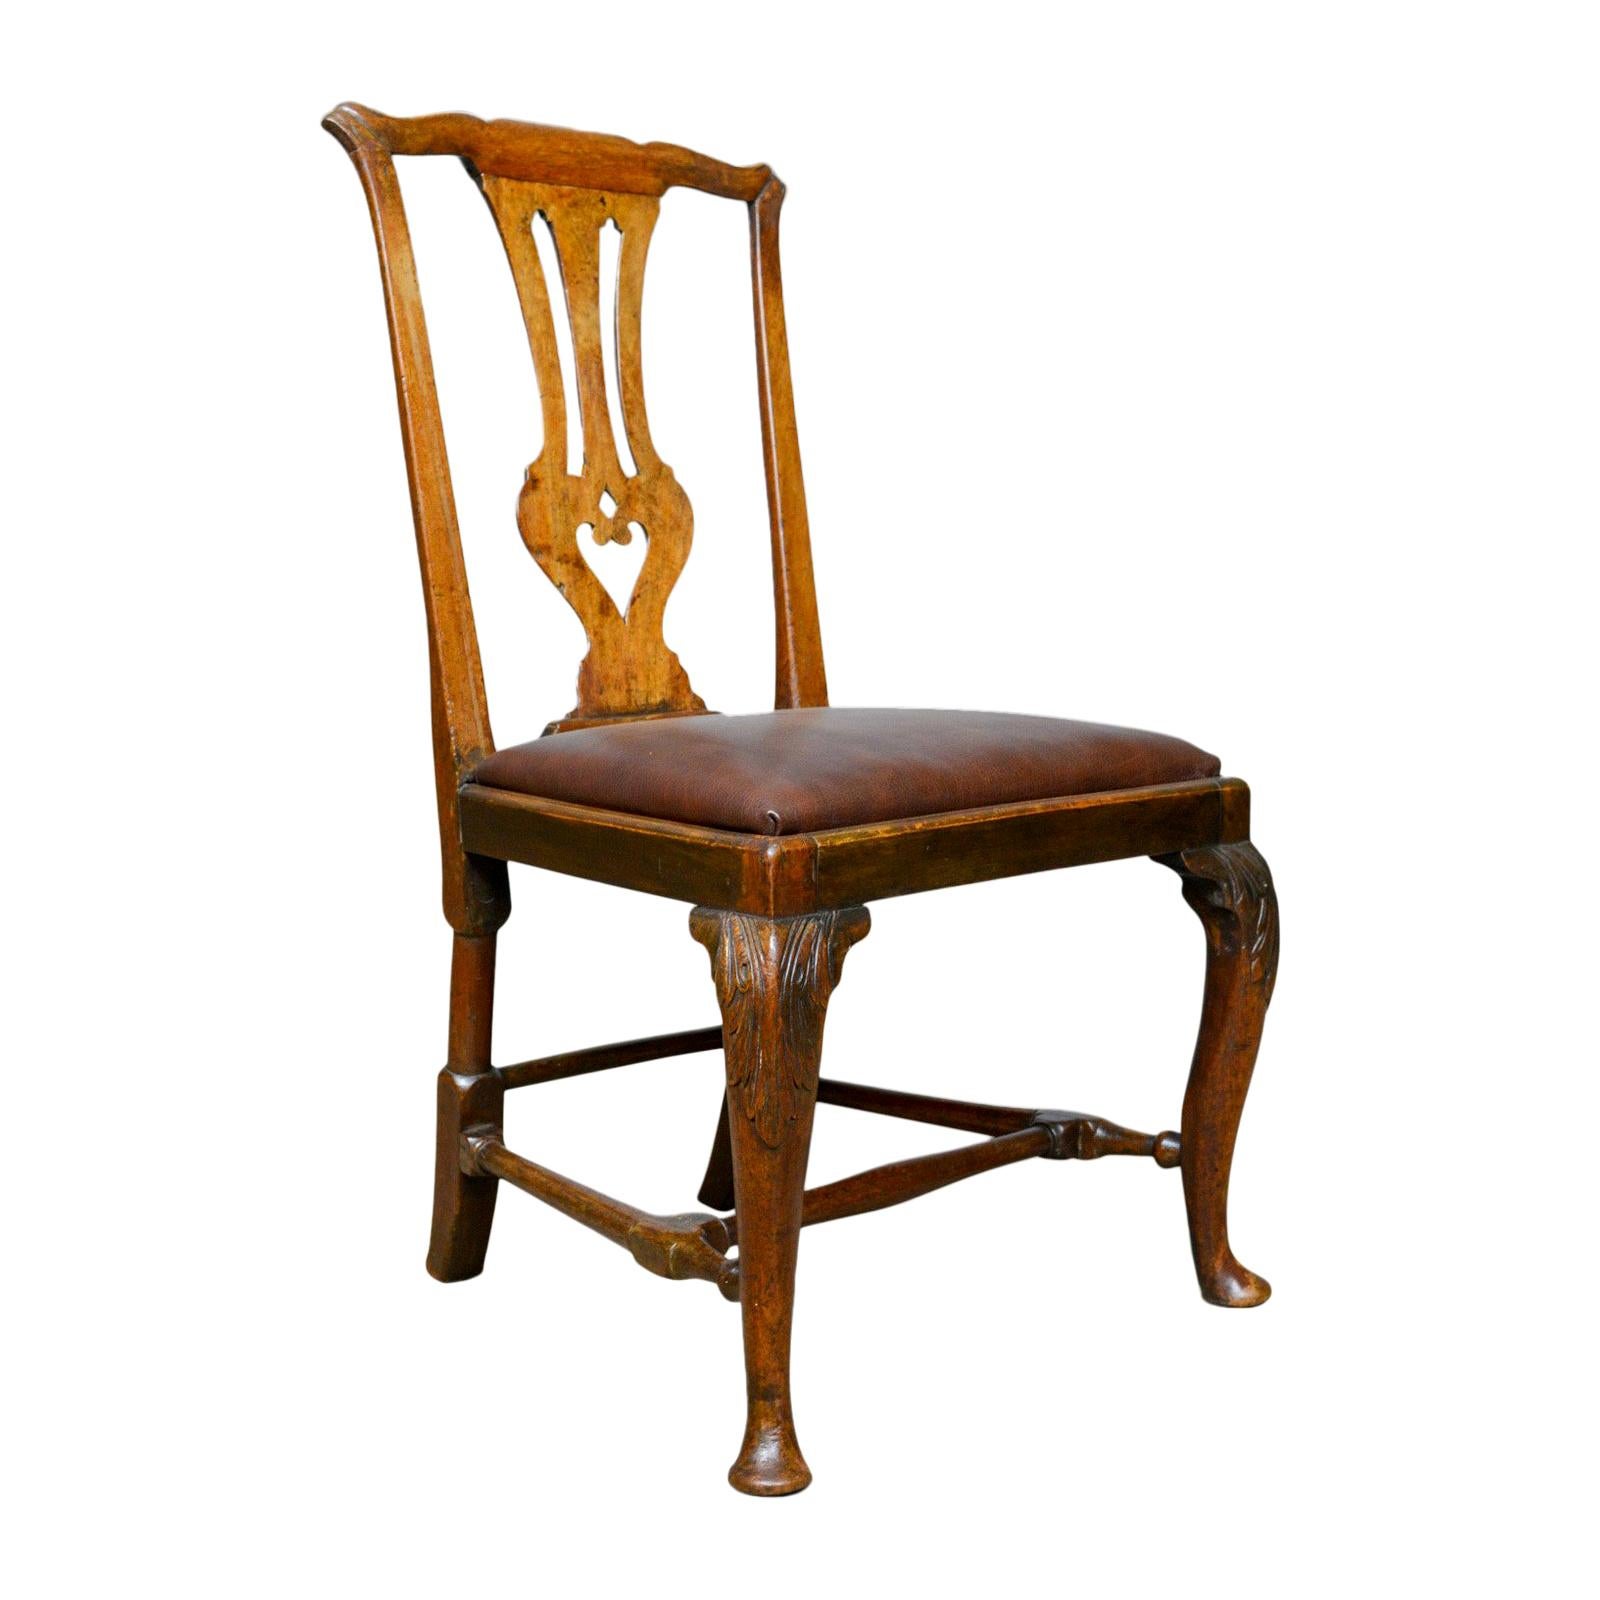 Georgian Antique Chair, English, Mahogany, Mid-18th Century